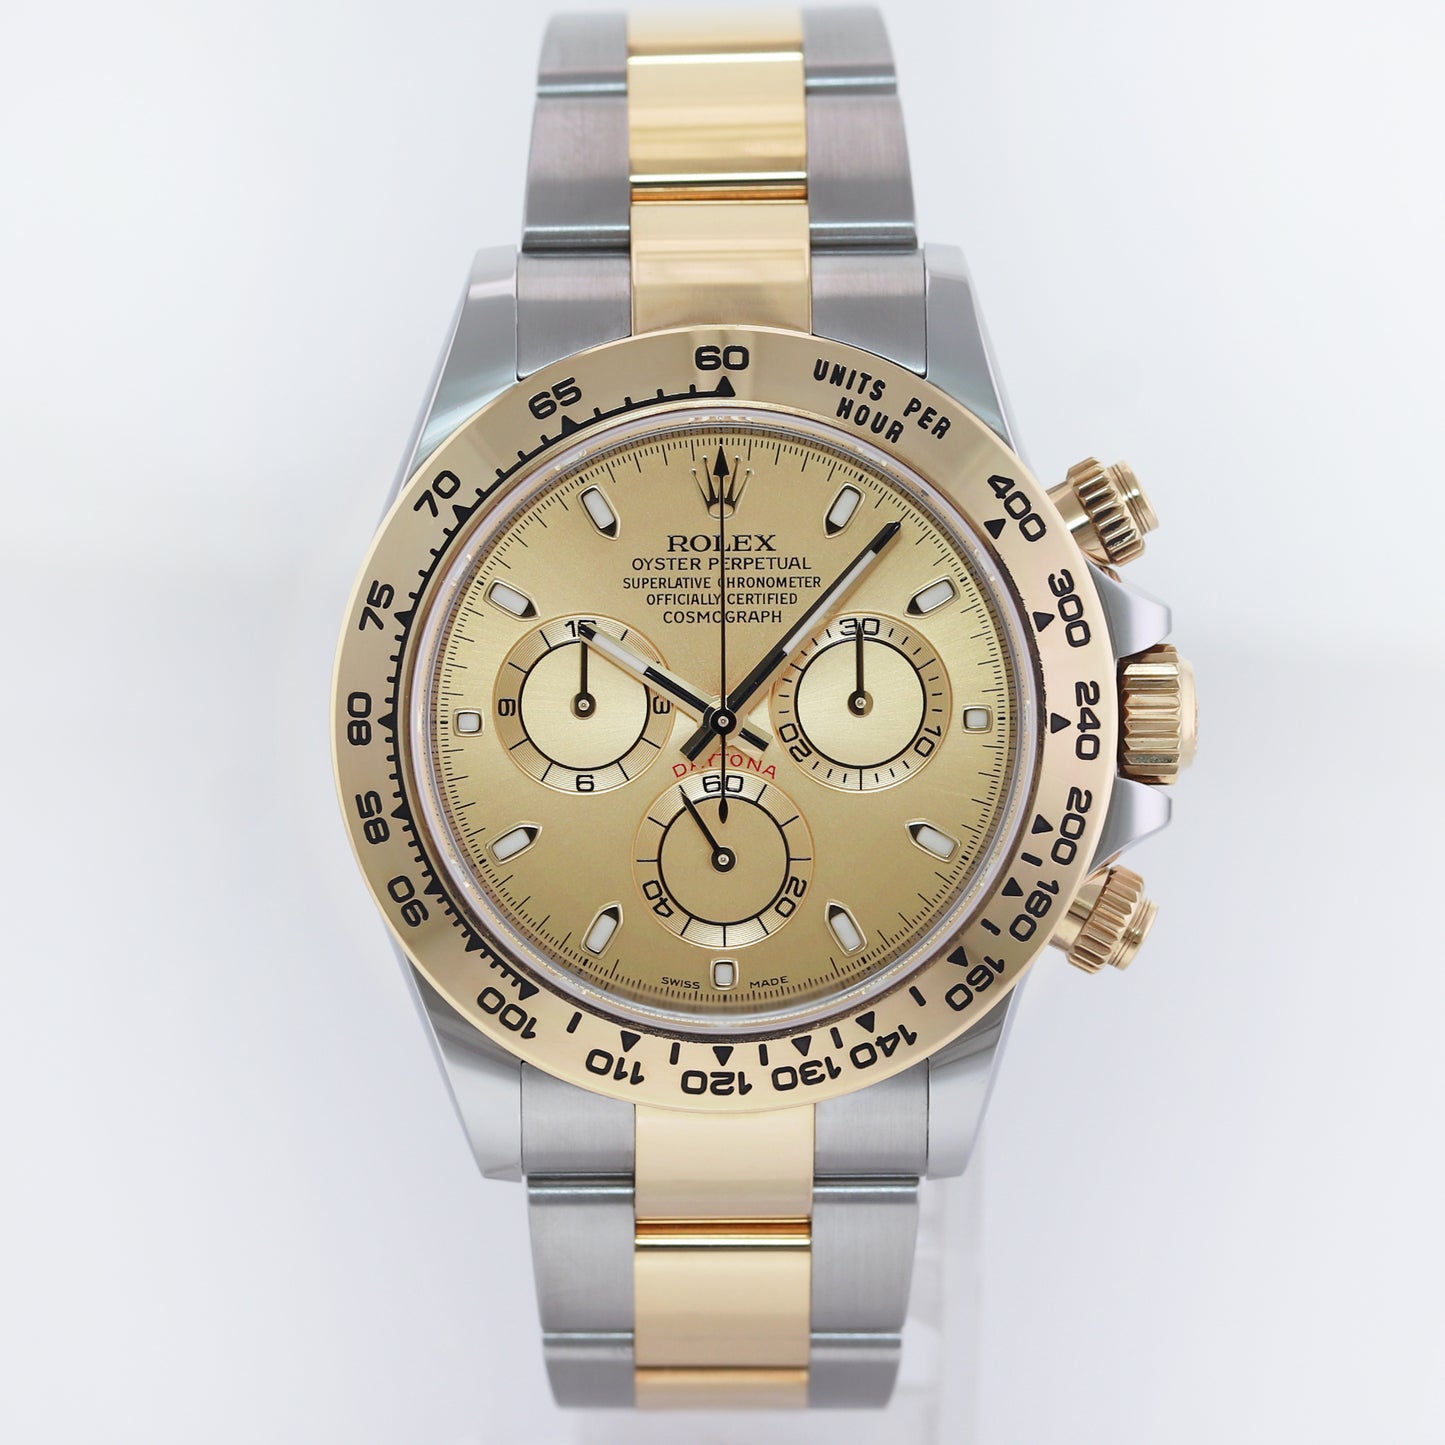 2020 MINT PAPERS Rolex Daytona Chrono 116503 Champagne Two Tone Gold Watch